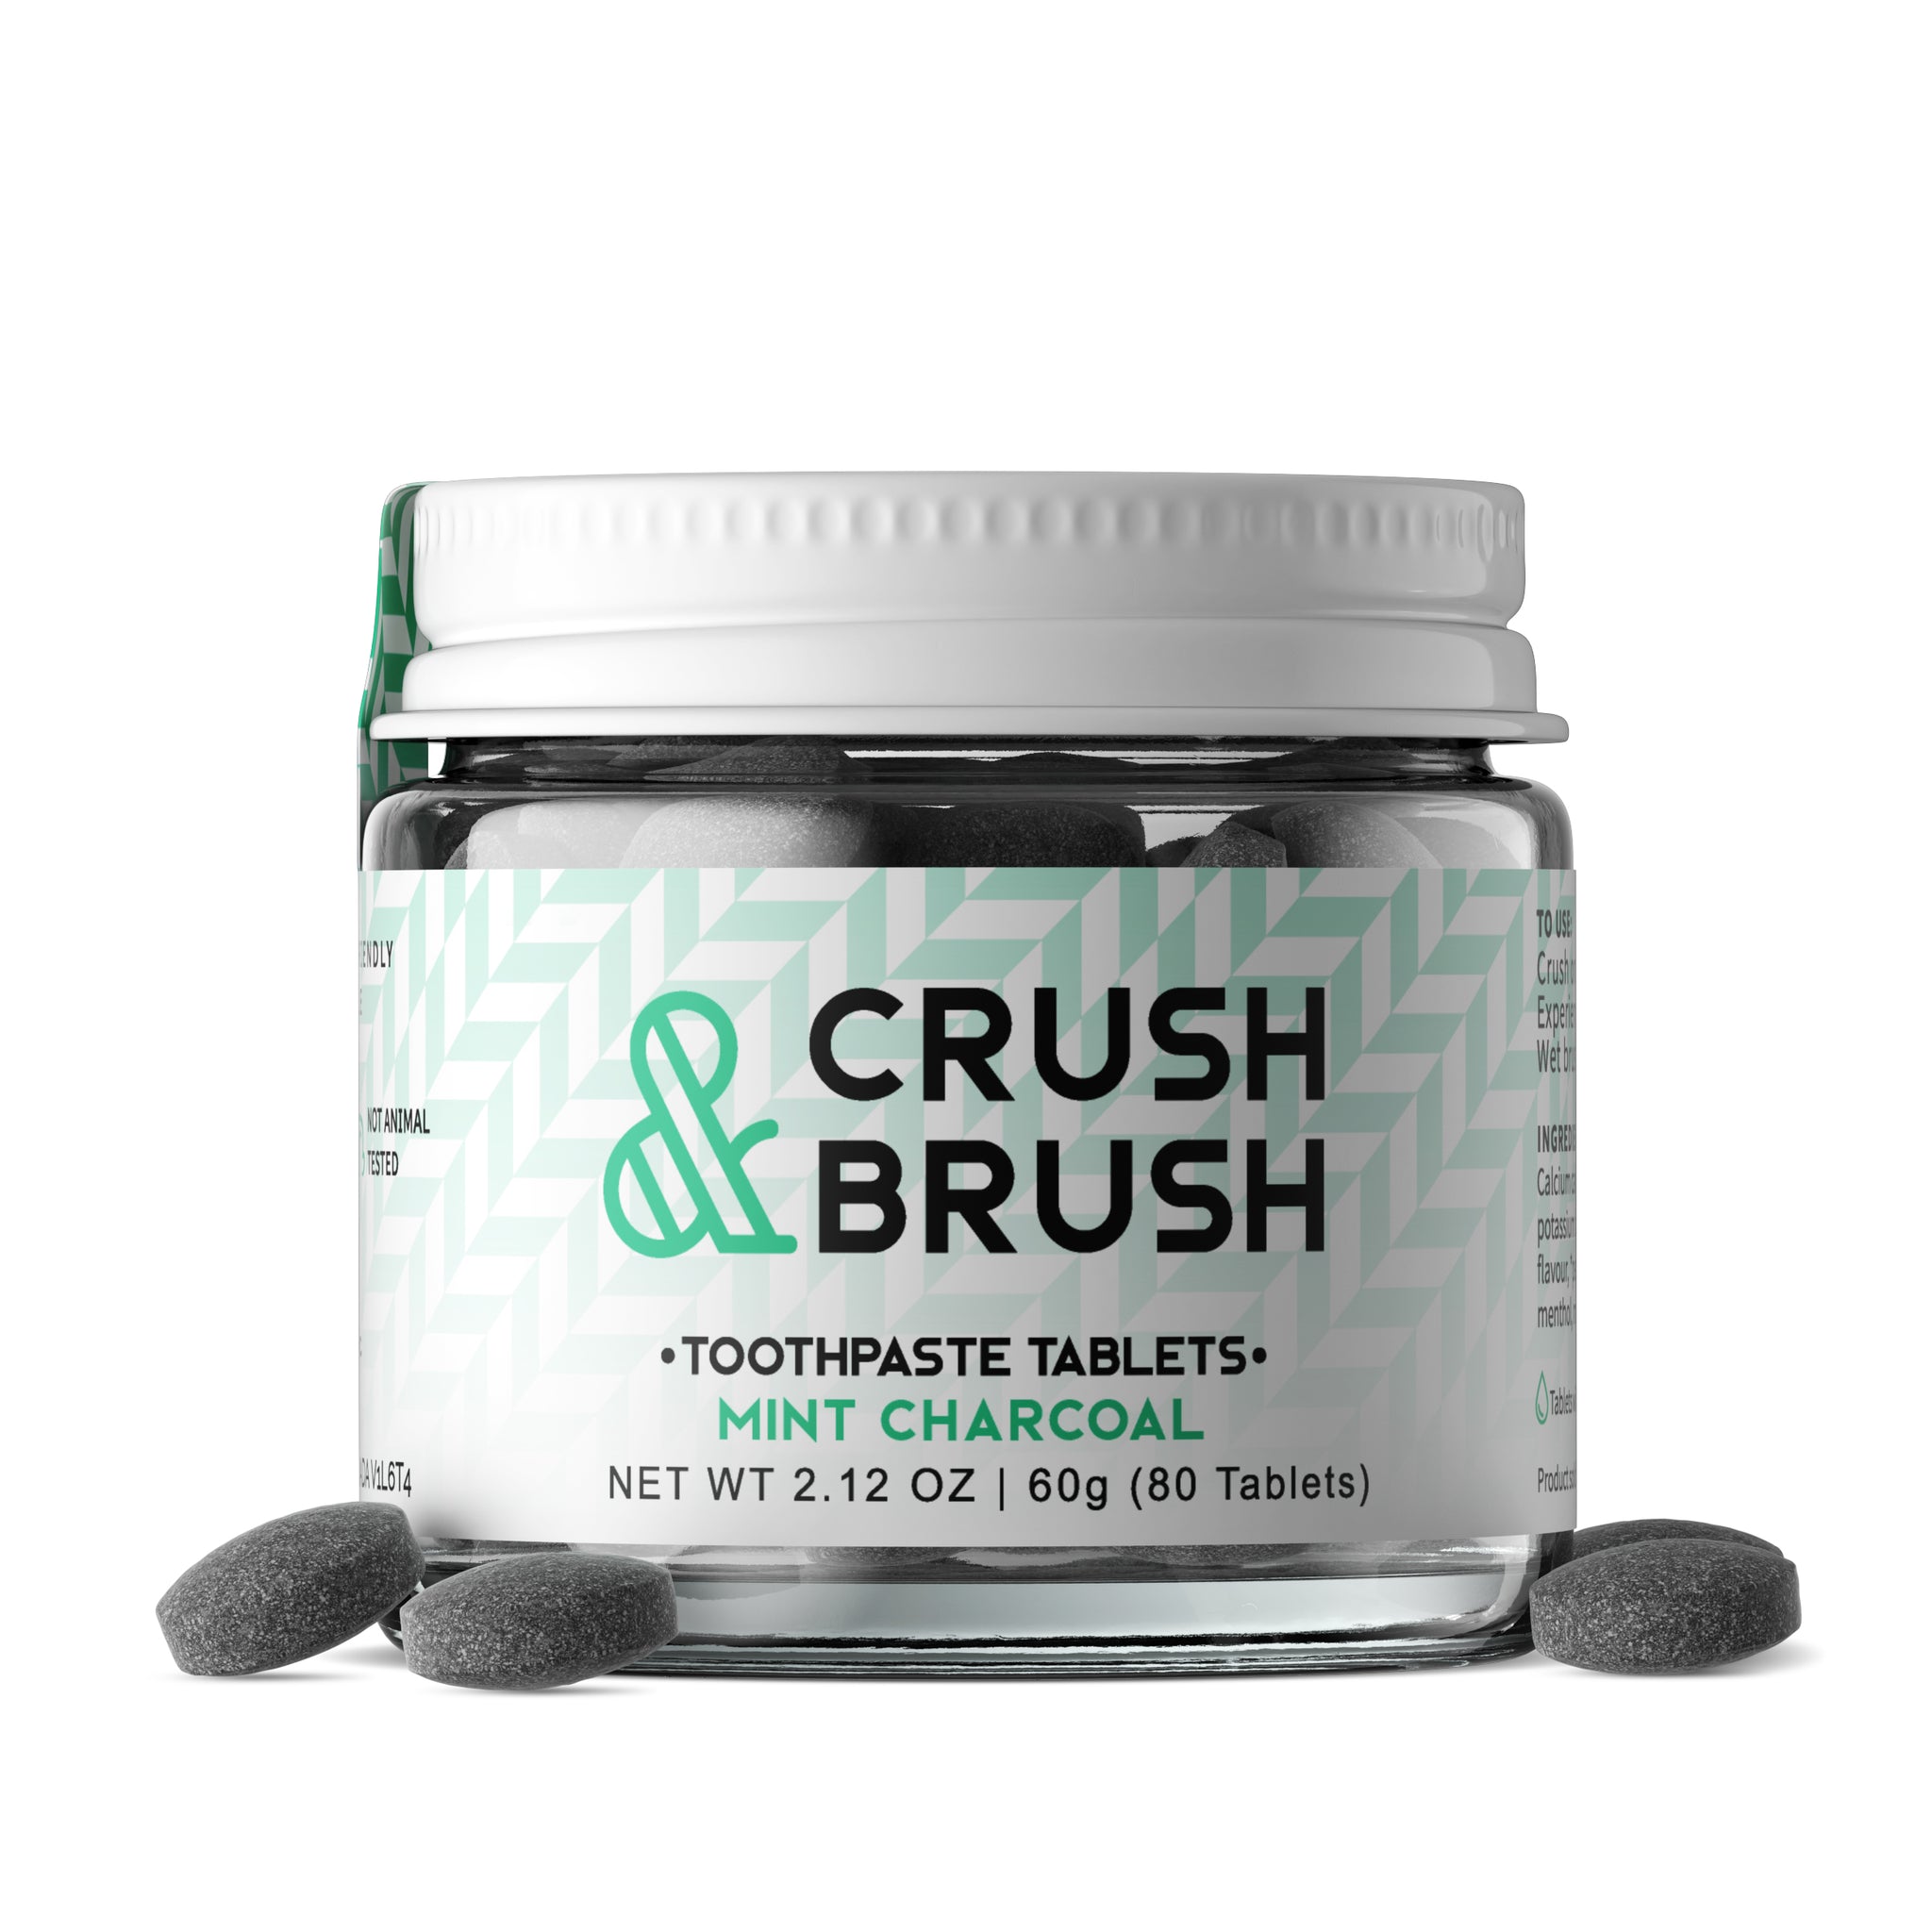 Crush & Brush CHARCOAL mint 60g